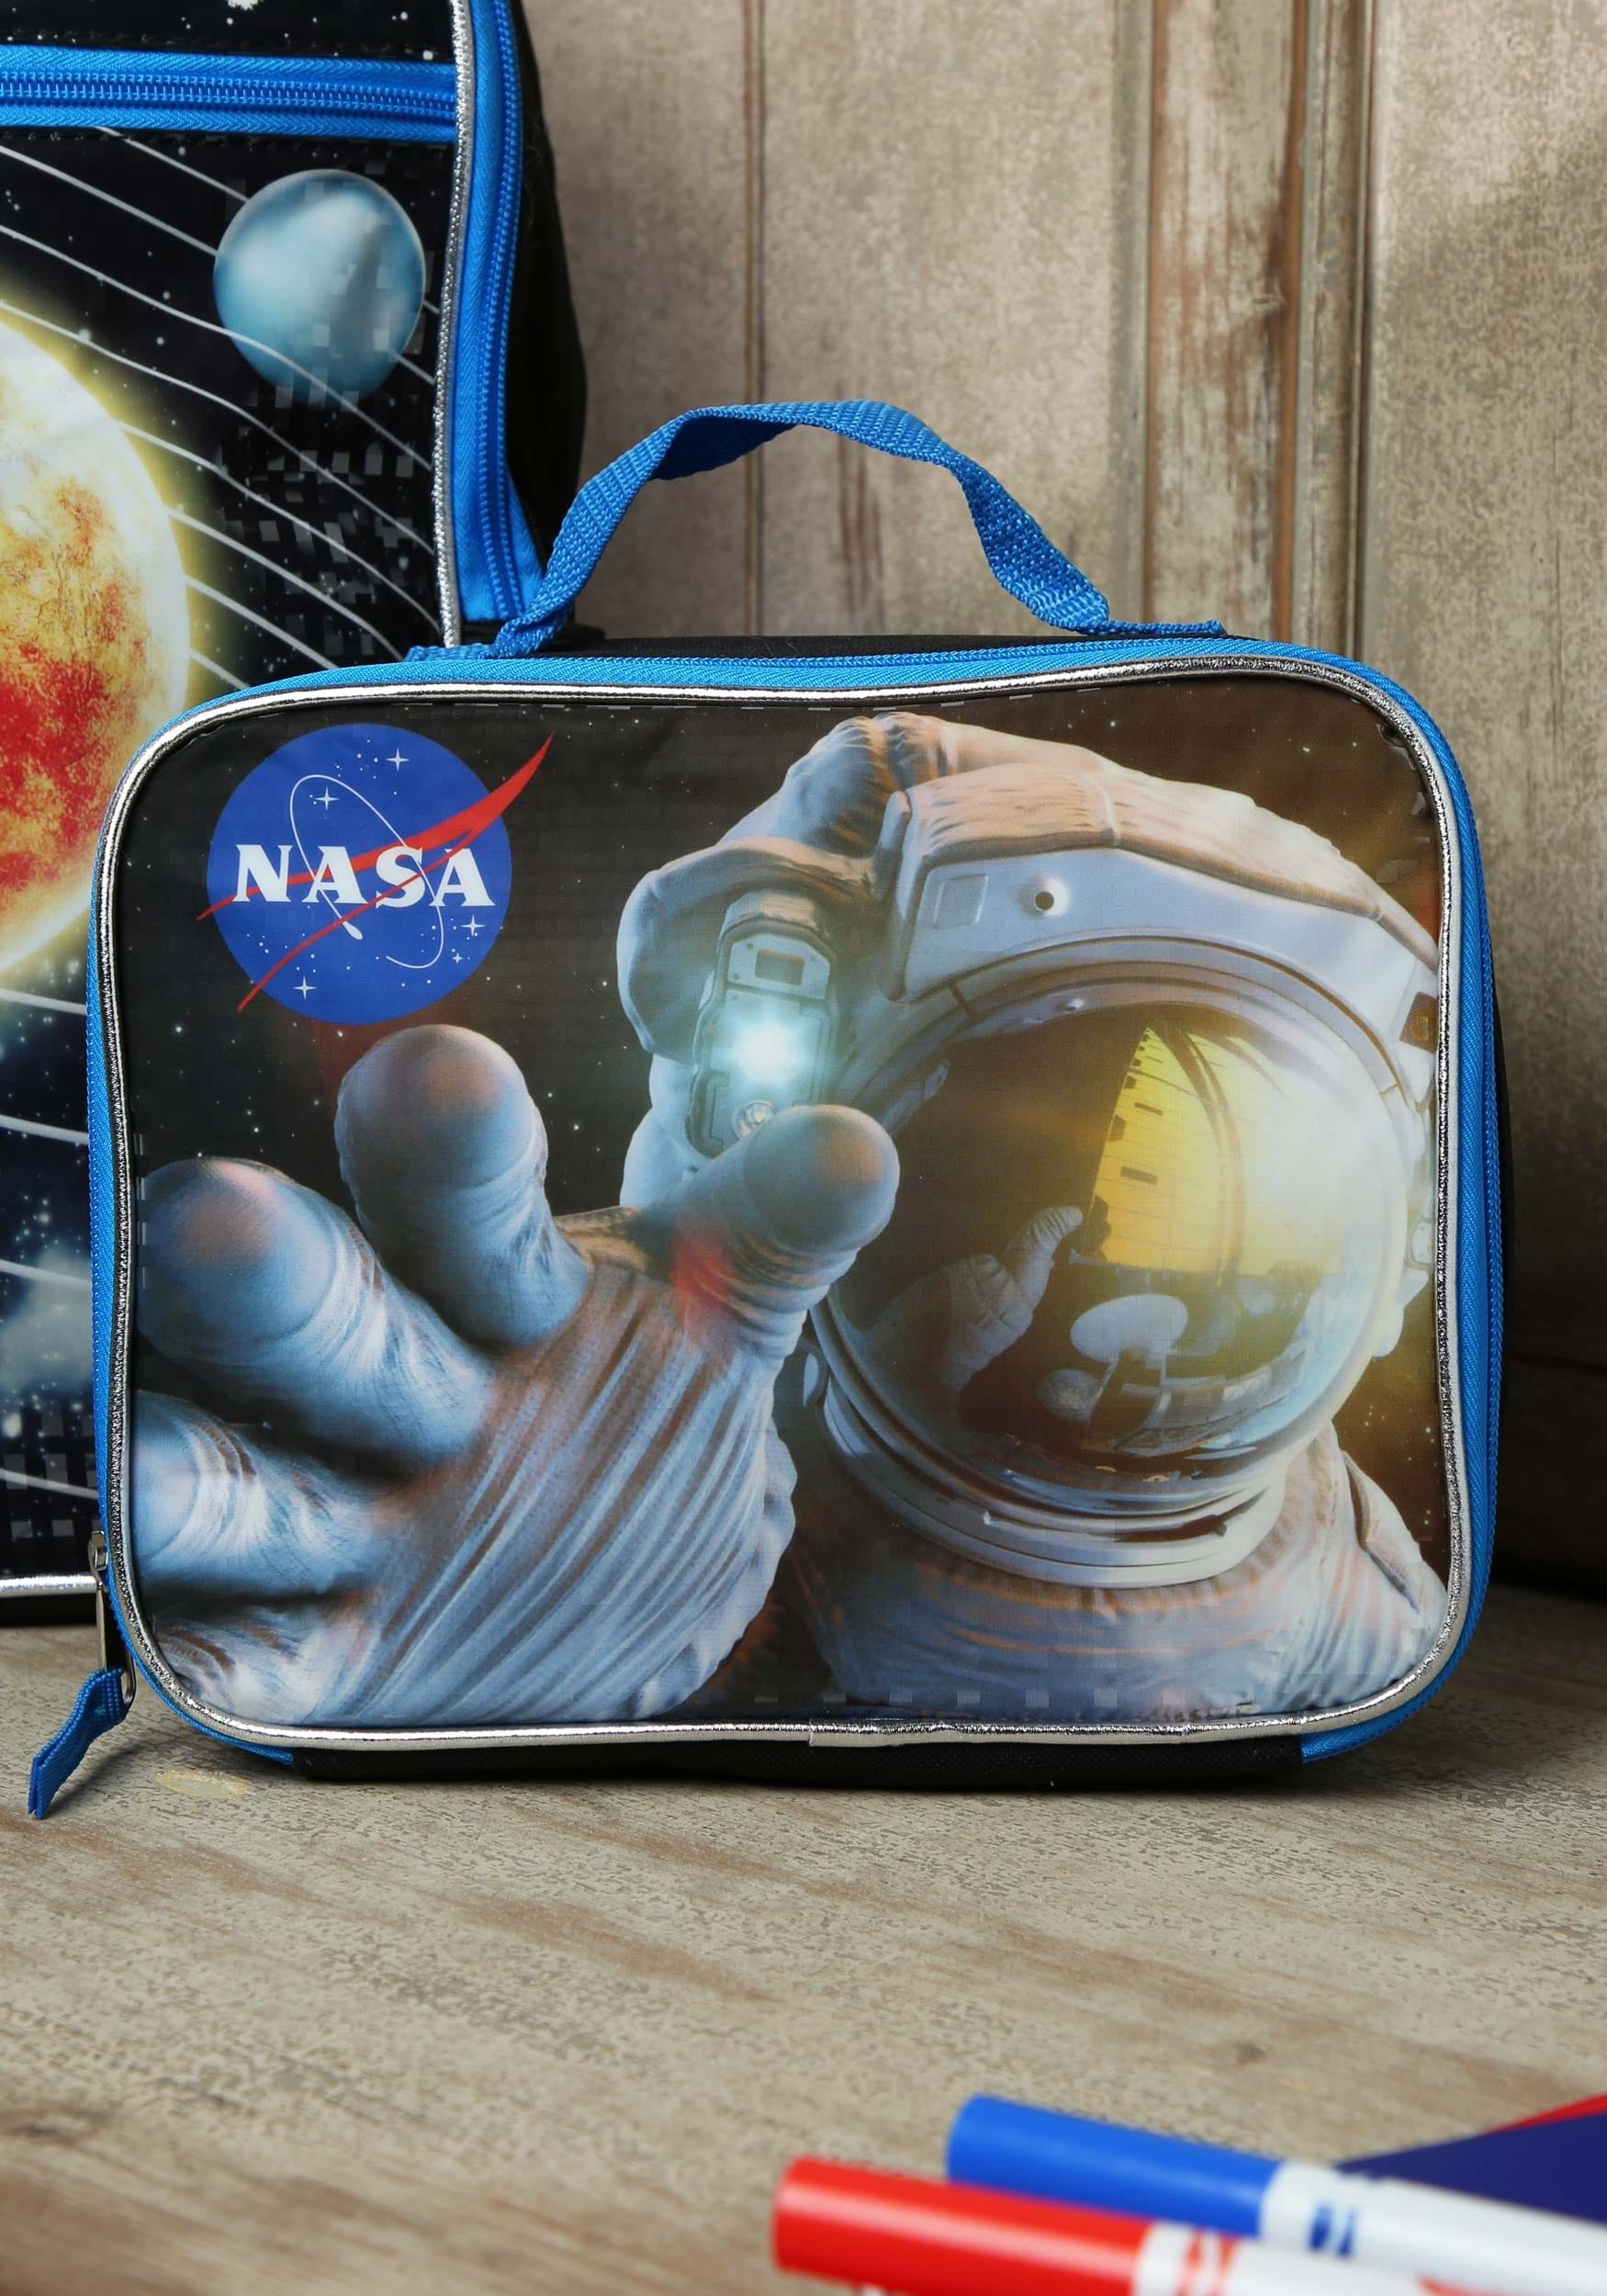 Kid's 5 Piece NASA Backpack Set , Back To School Bags